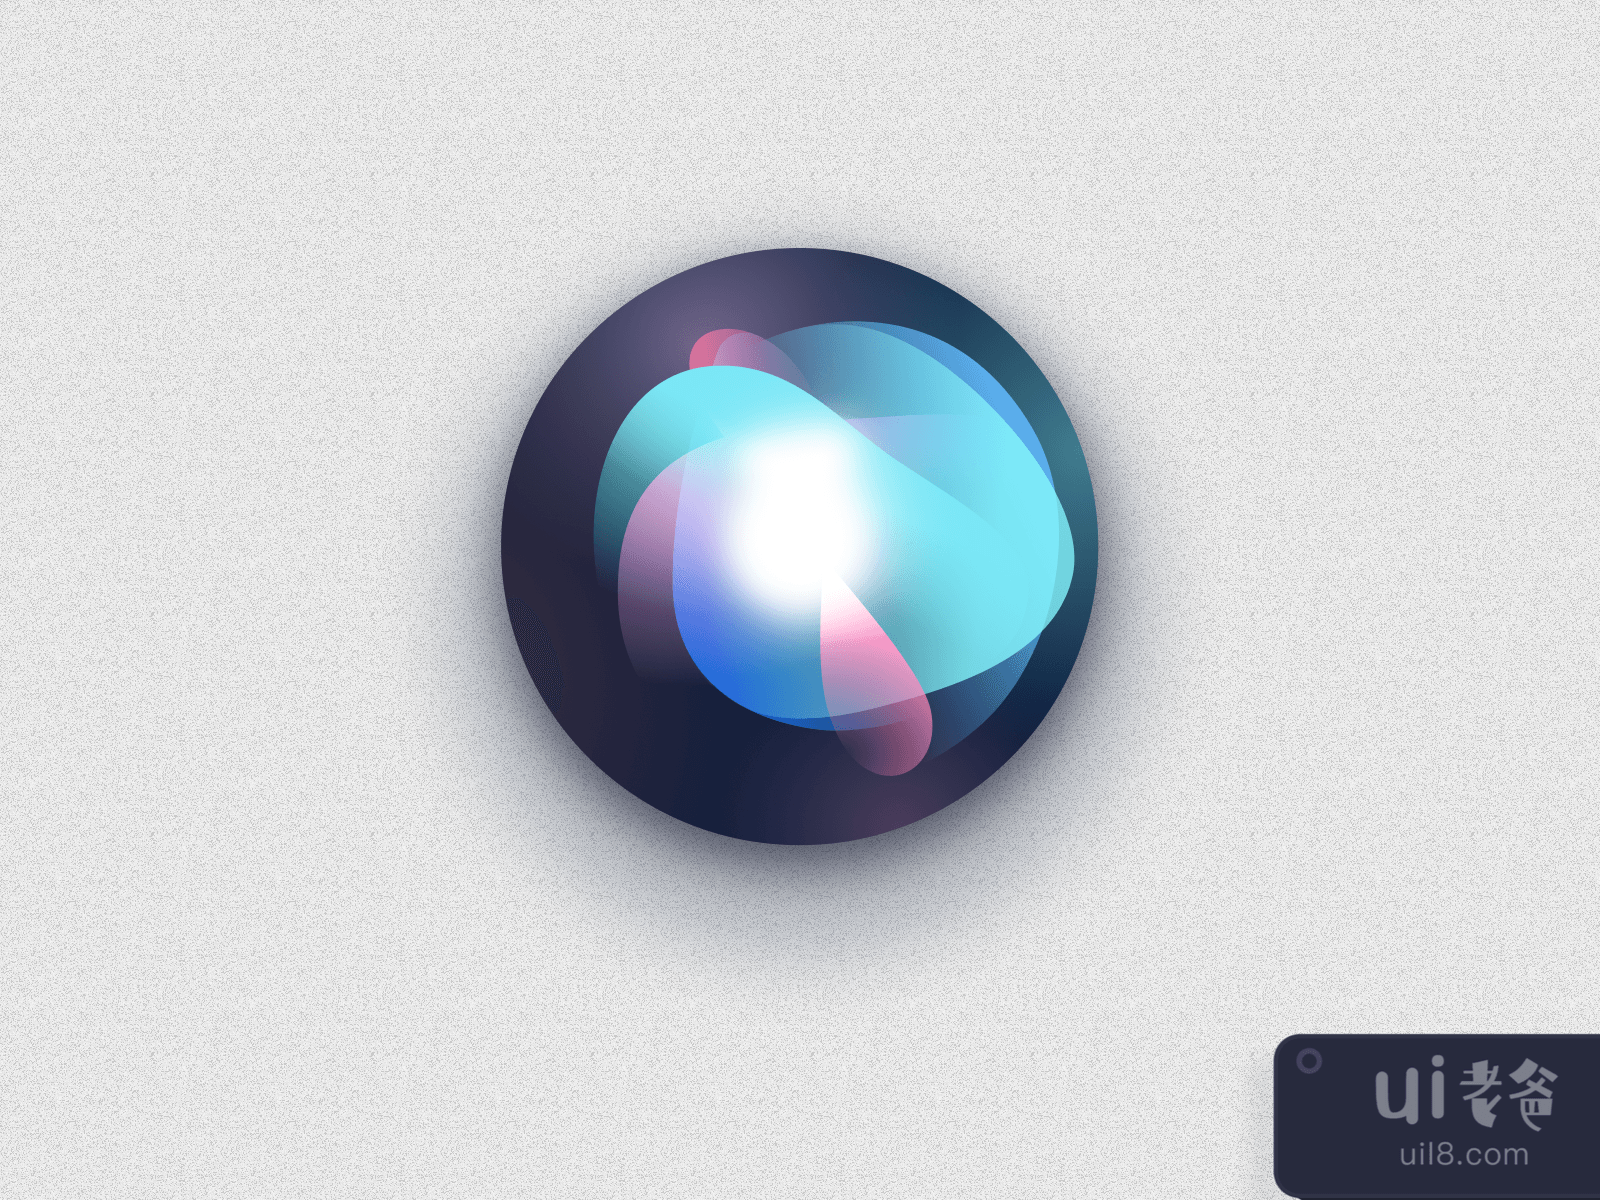 iOS 14 Siri Icon for Figma and Adobe XD No 2